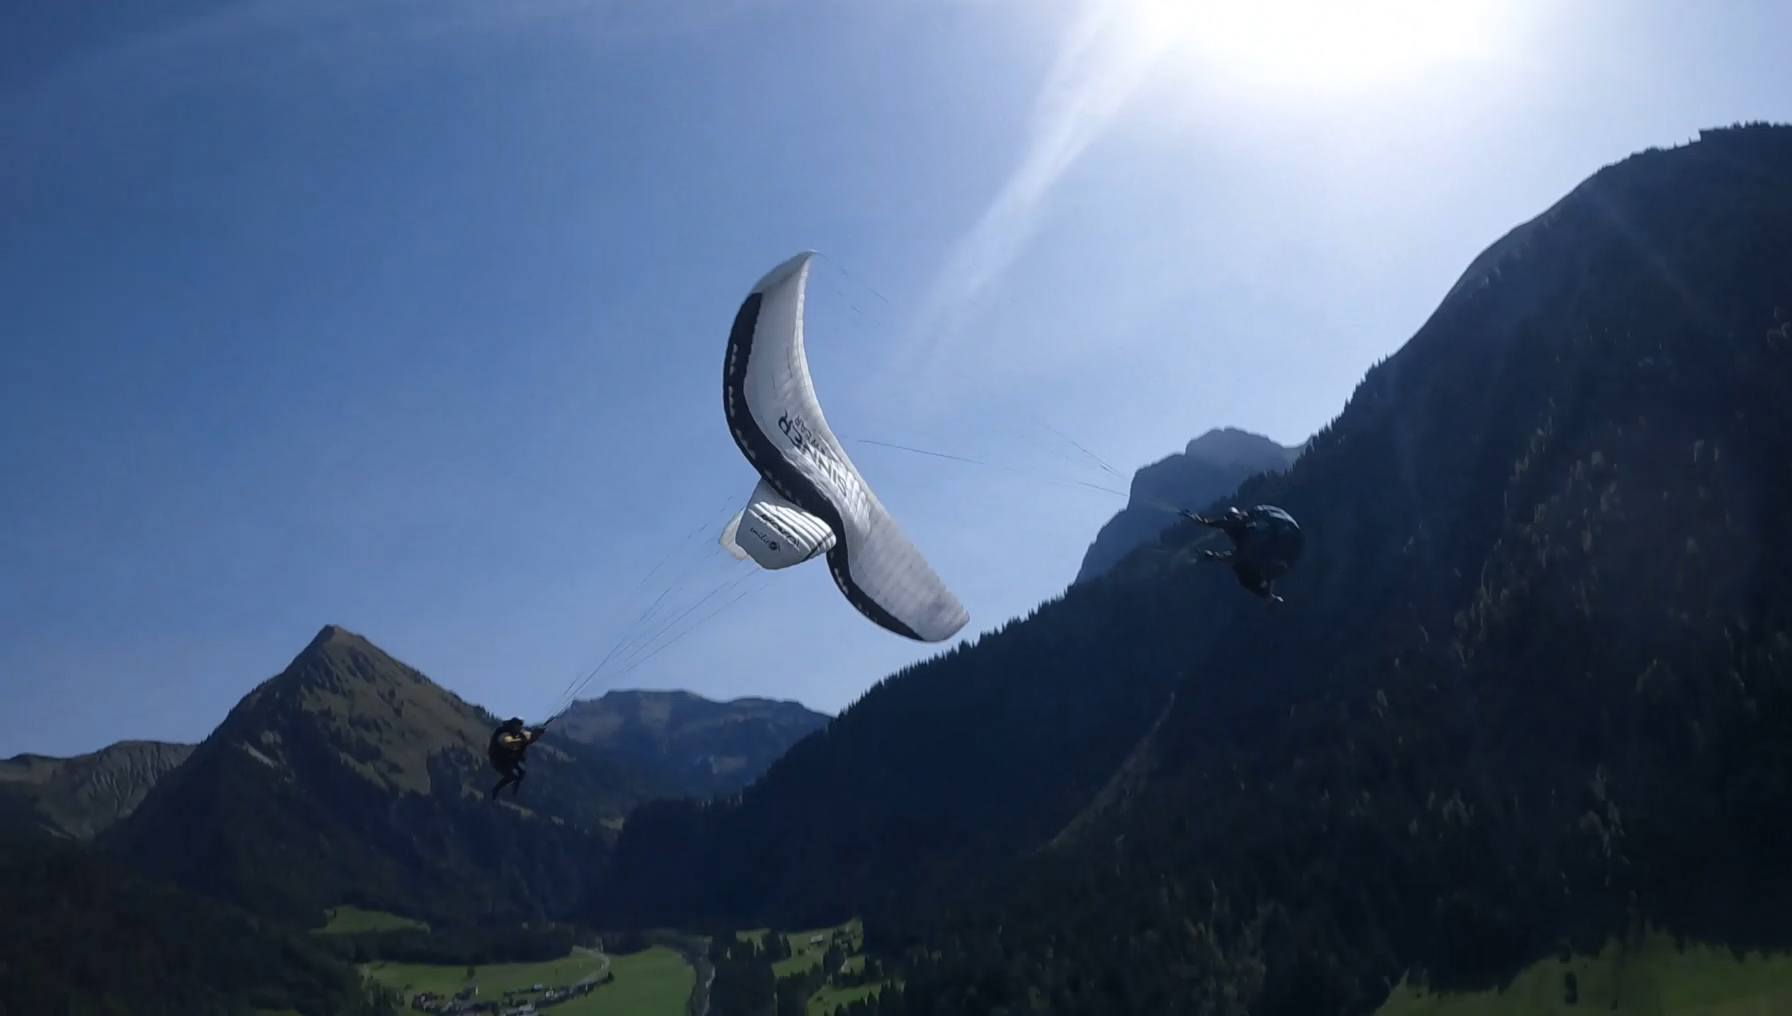 Art of Synchro Flying - FPV Acro Paragliding tricks